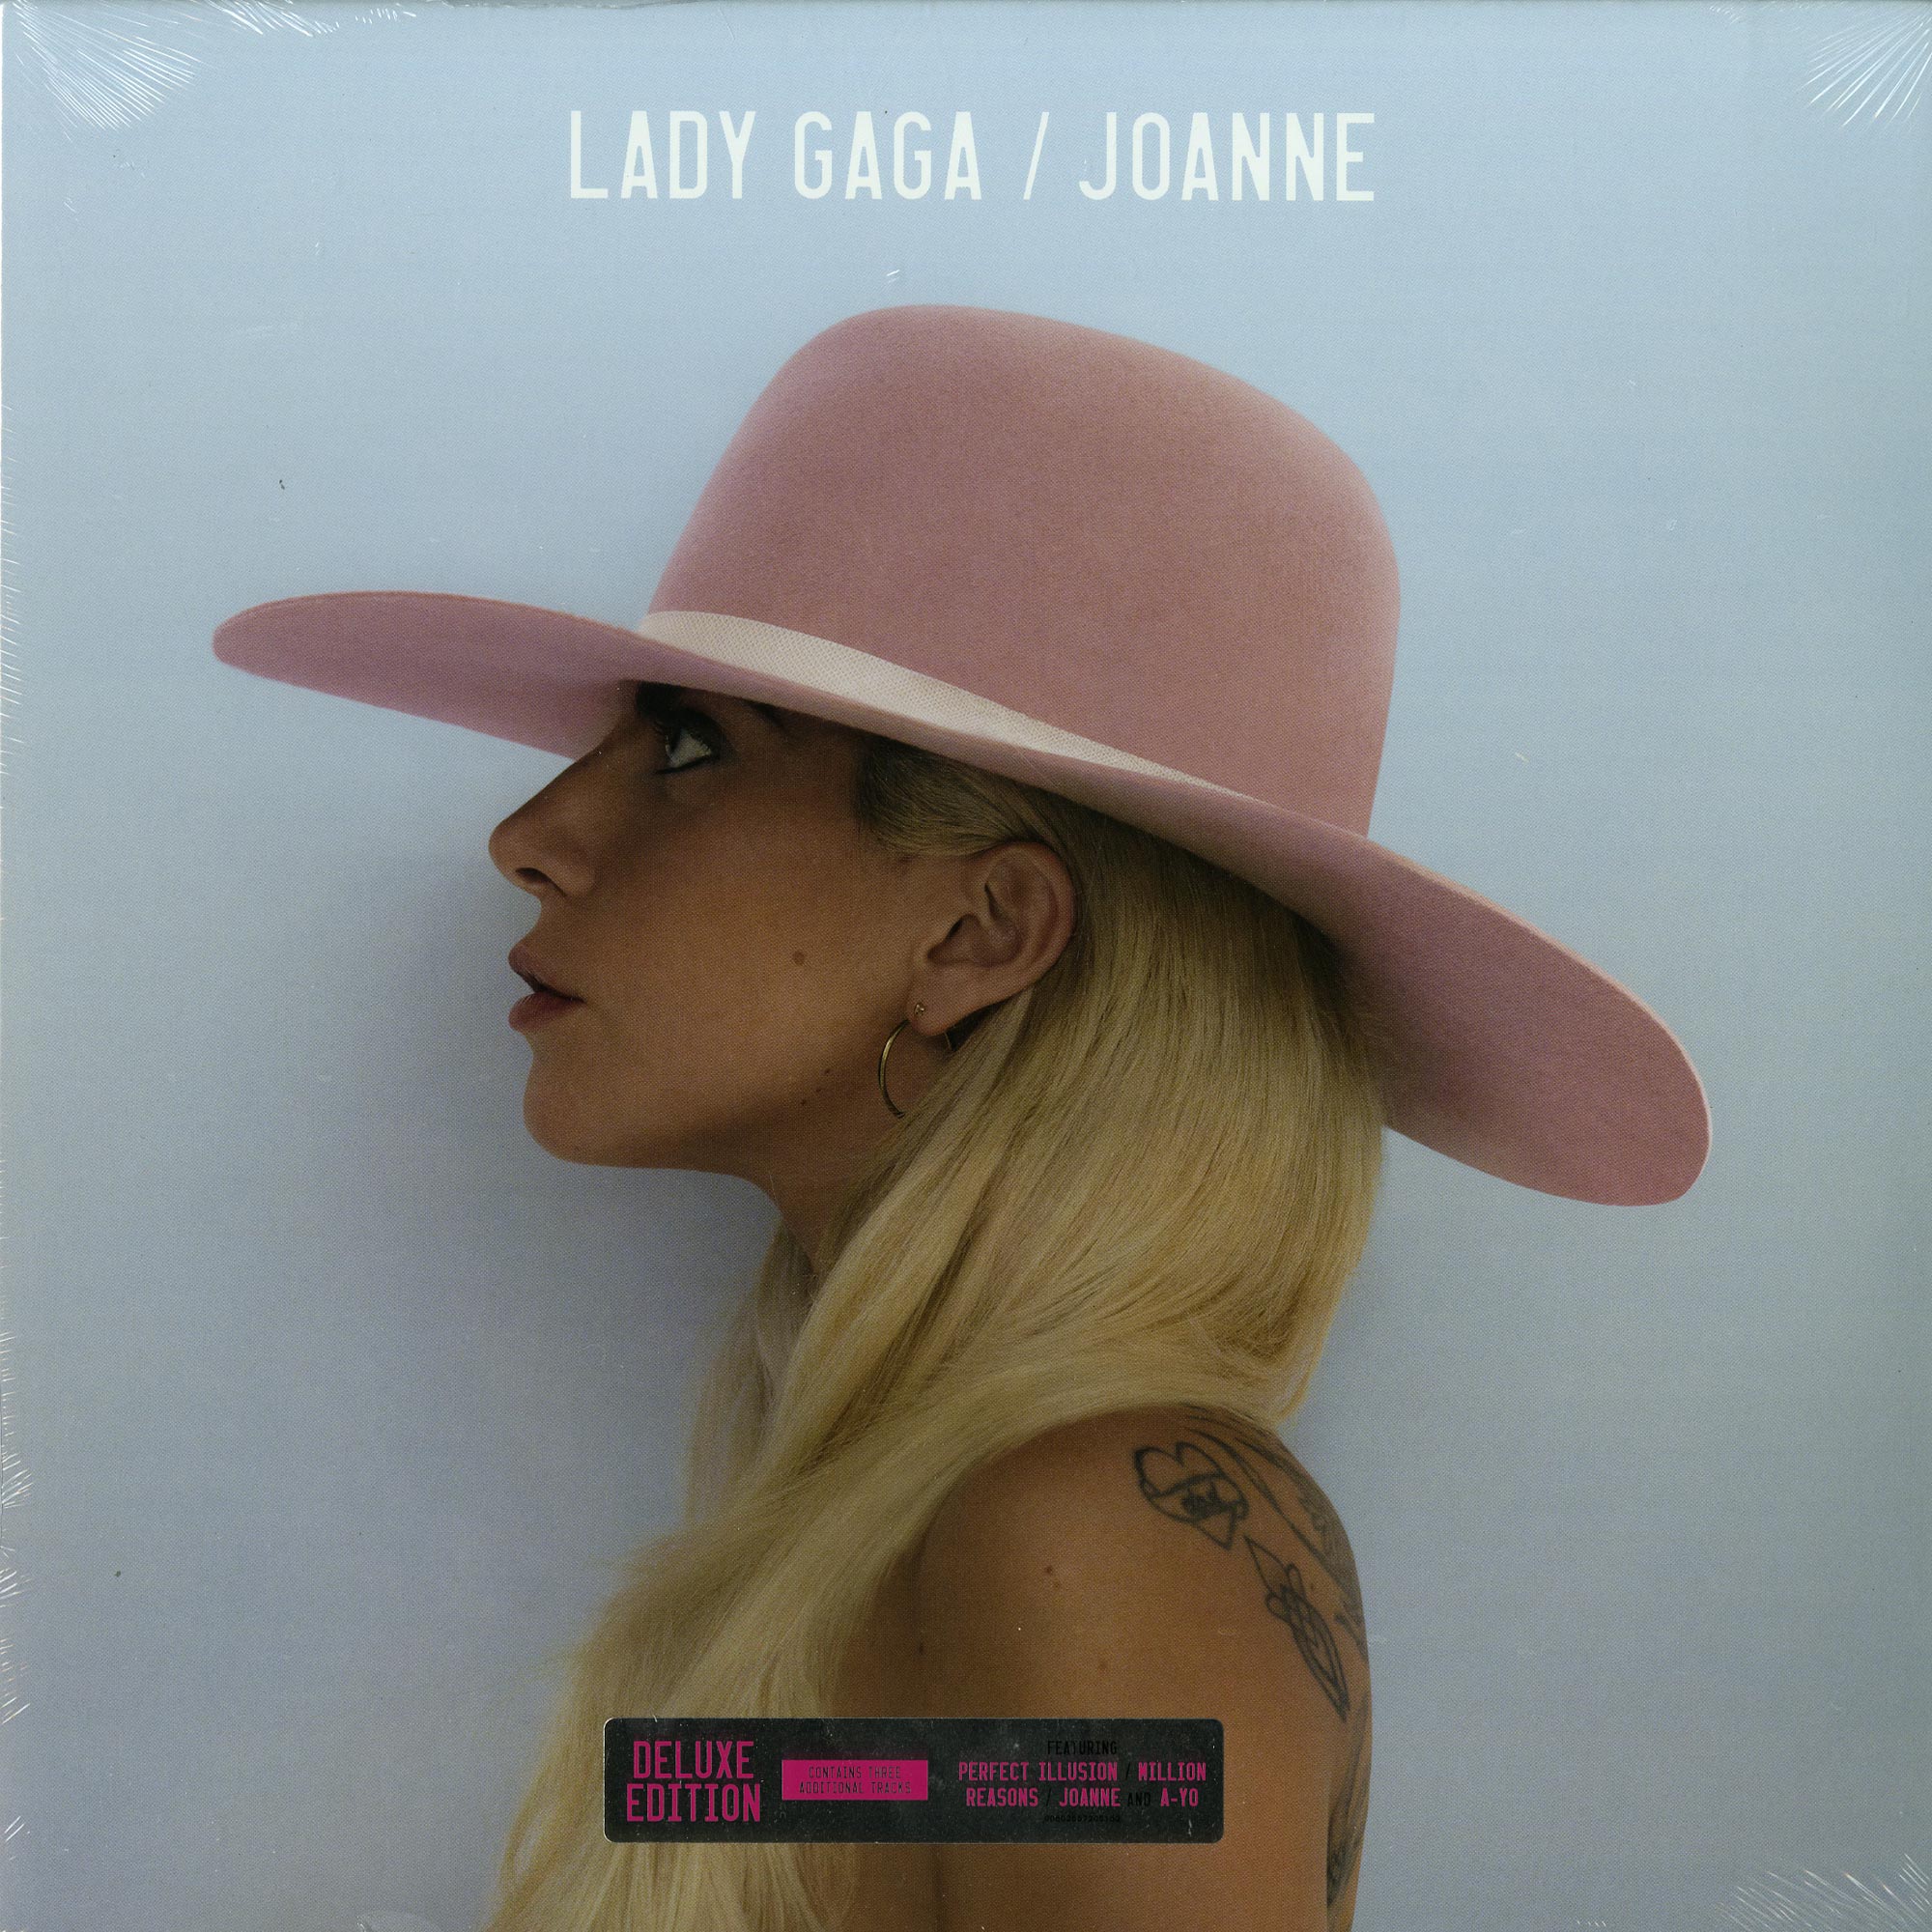 Lady Gaga "Joanne" Deluxe Edition 2LP (With 3 Bonus Tracks)